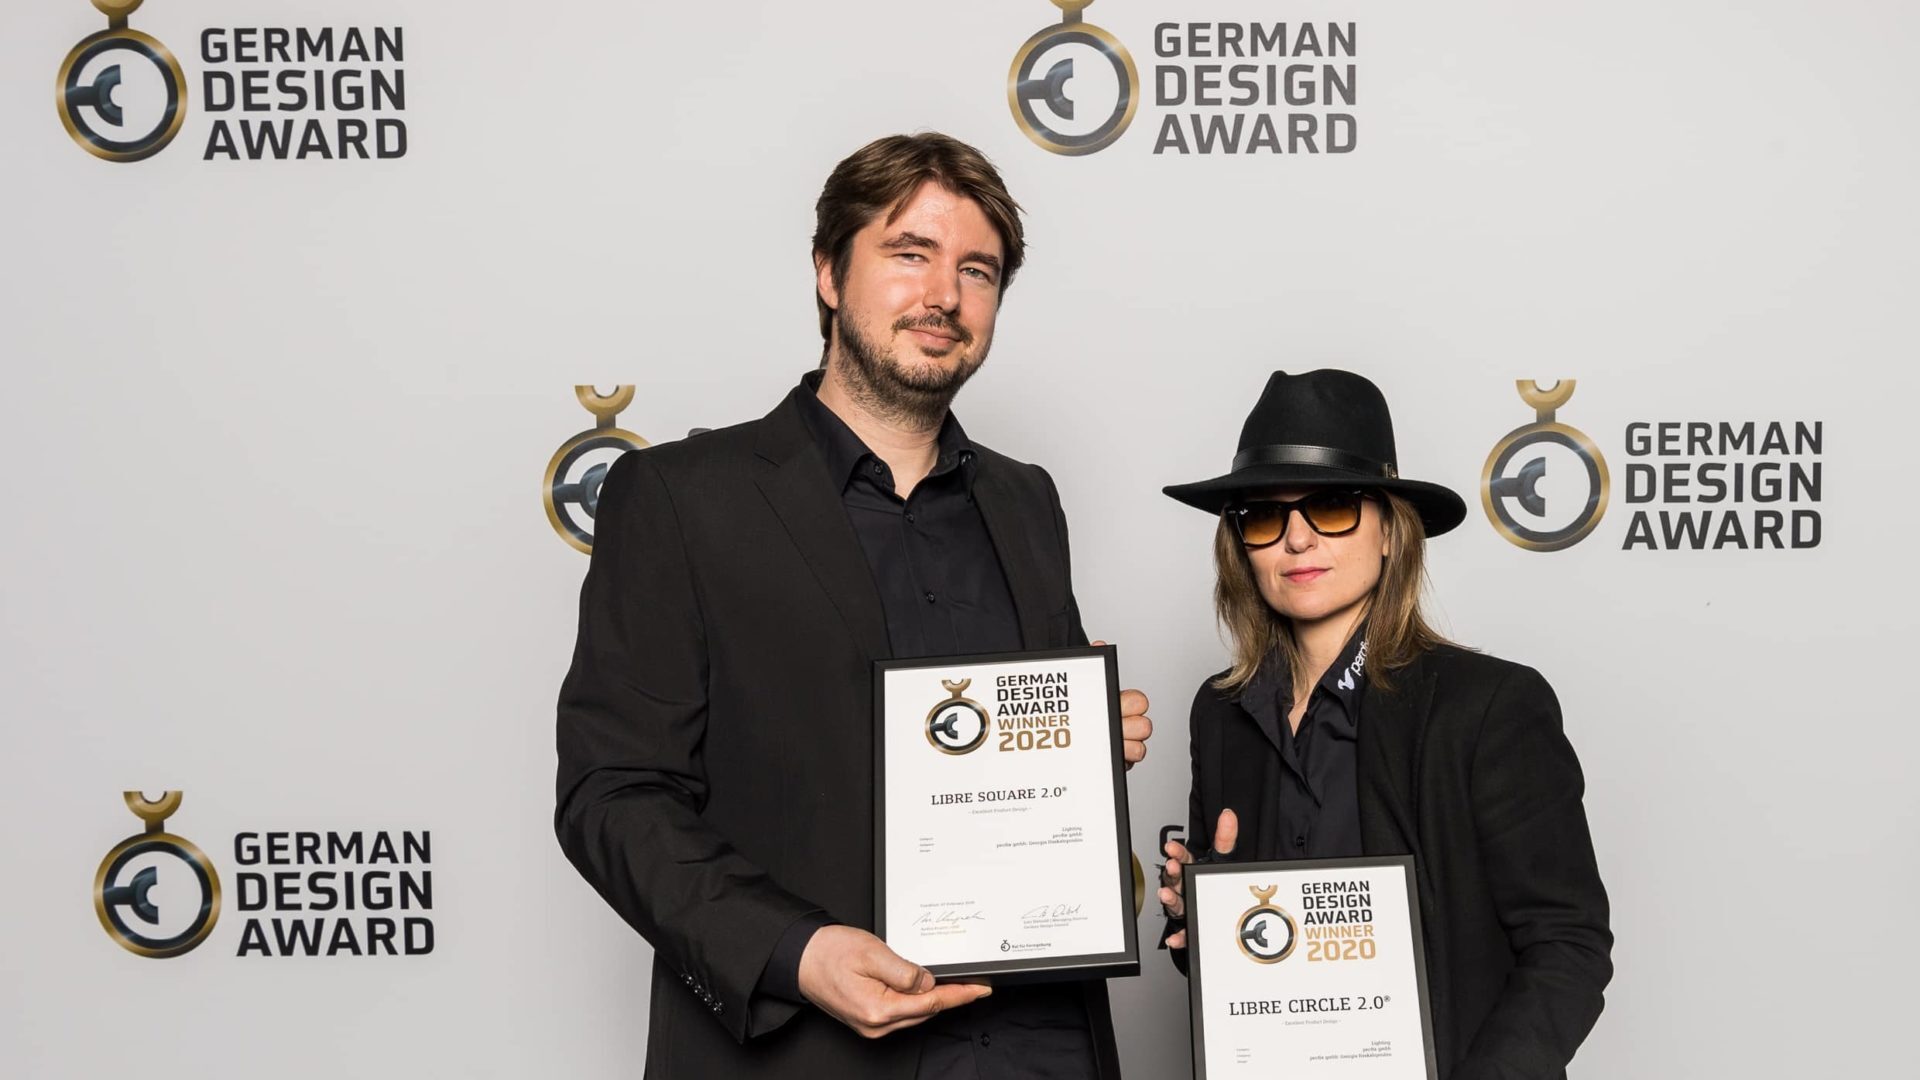 German Design Award, Gewinner, Design, LED Beleuchtung, LIBRE CIRCLE 2.0®, LIBRE SQUARE 2.0®